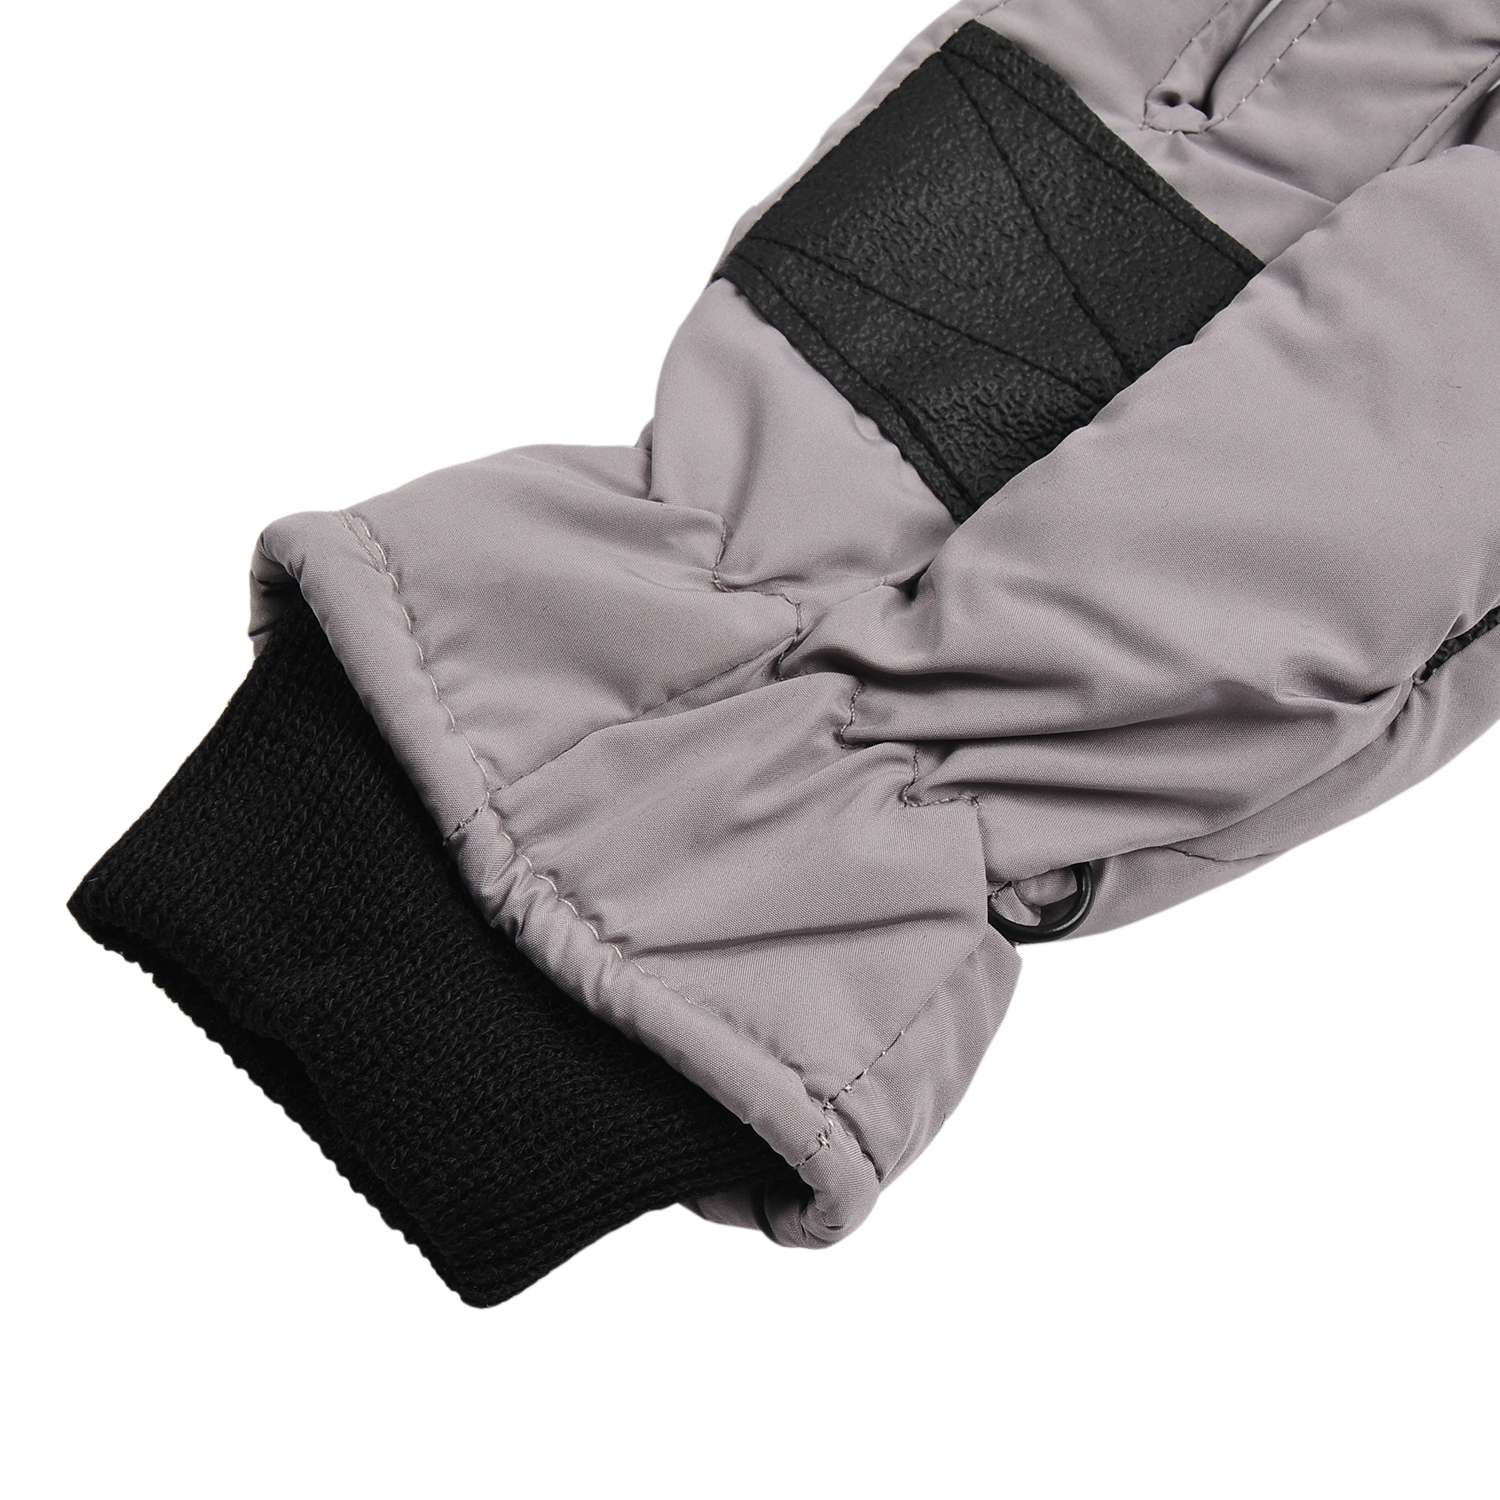 Перчатки S.gloves S 2177-M серый - фото 2